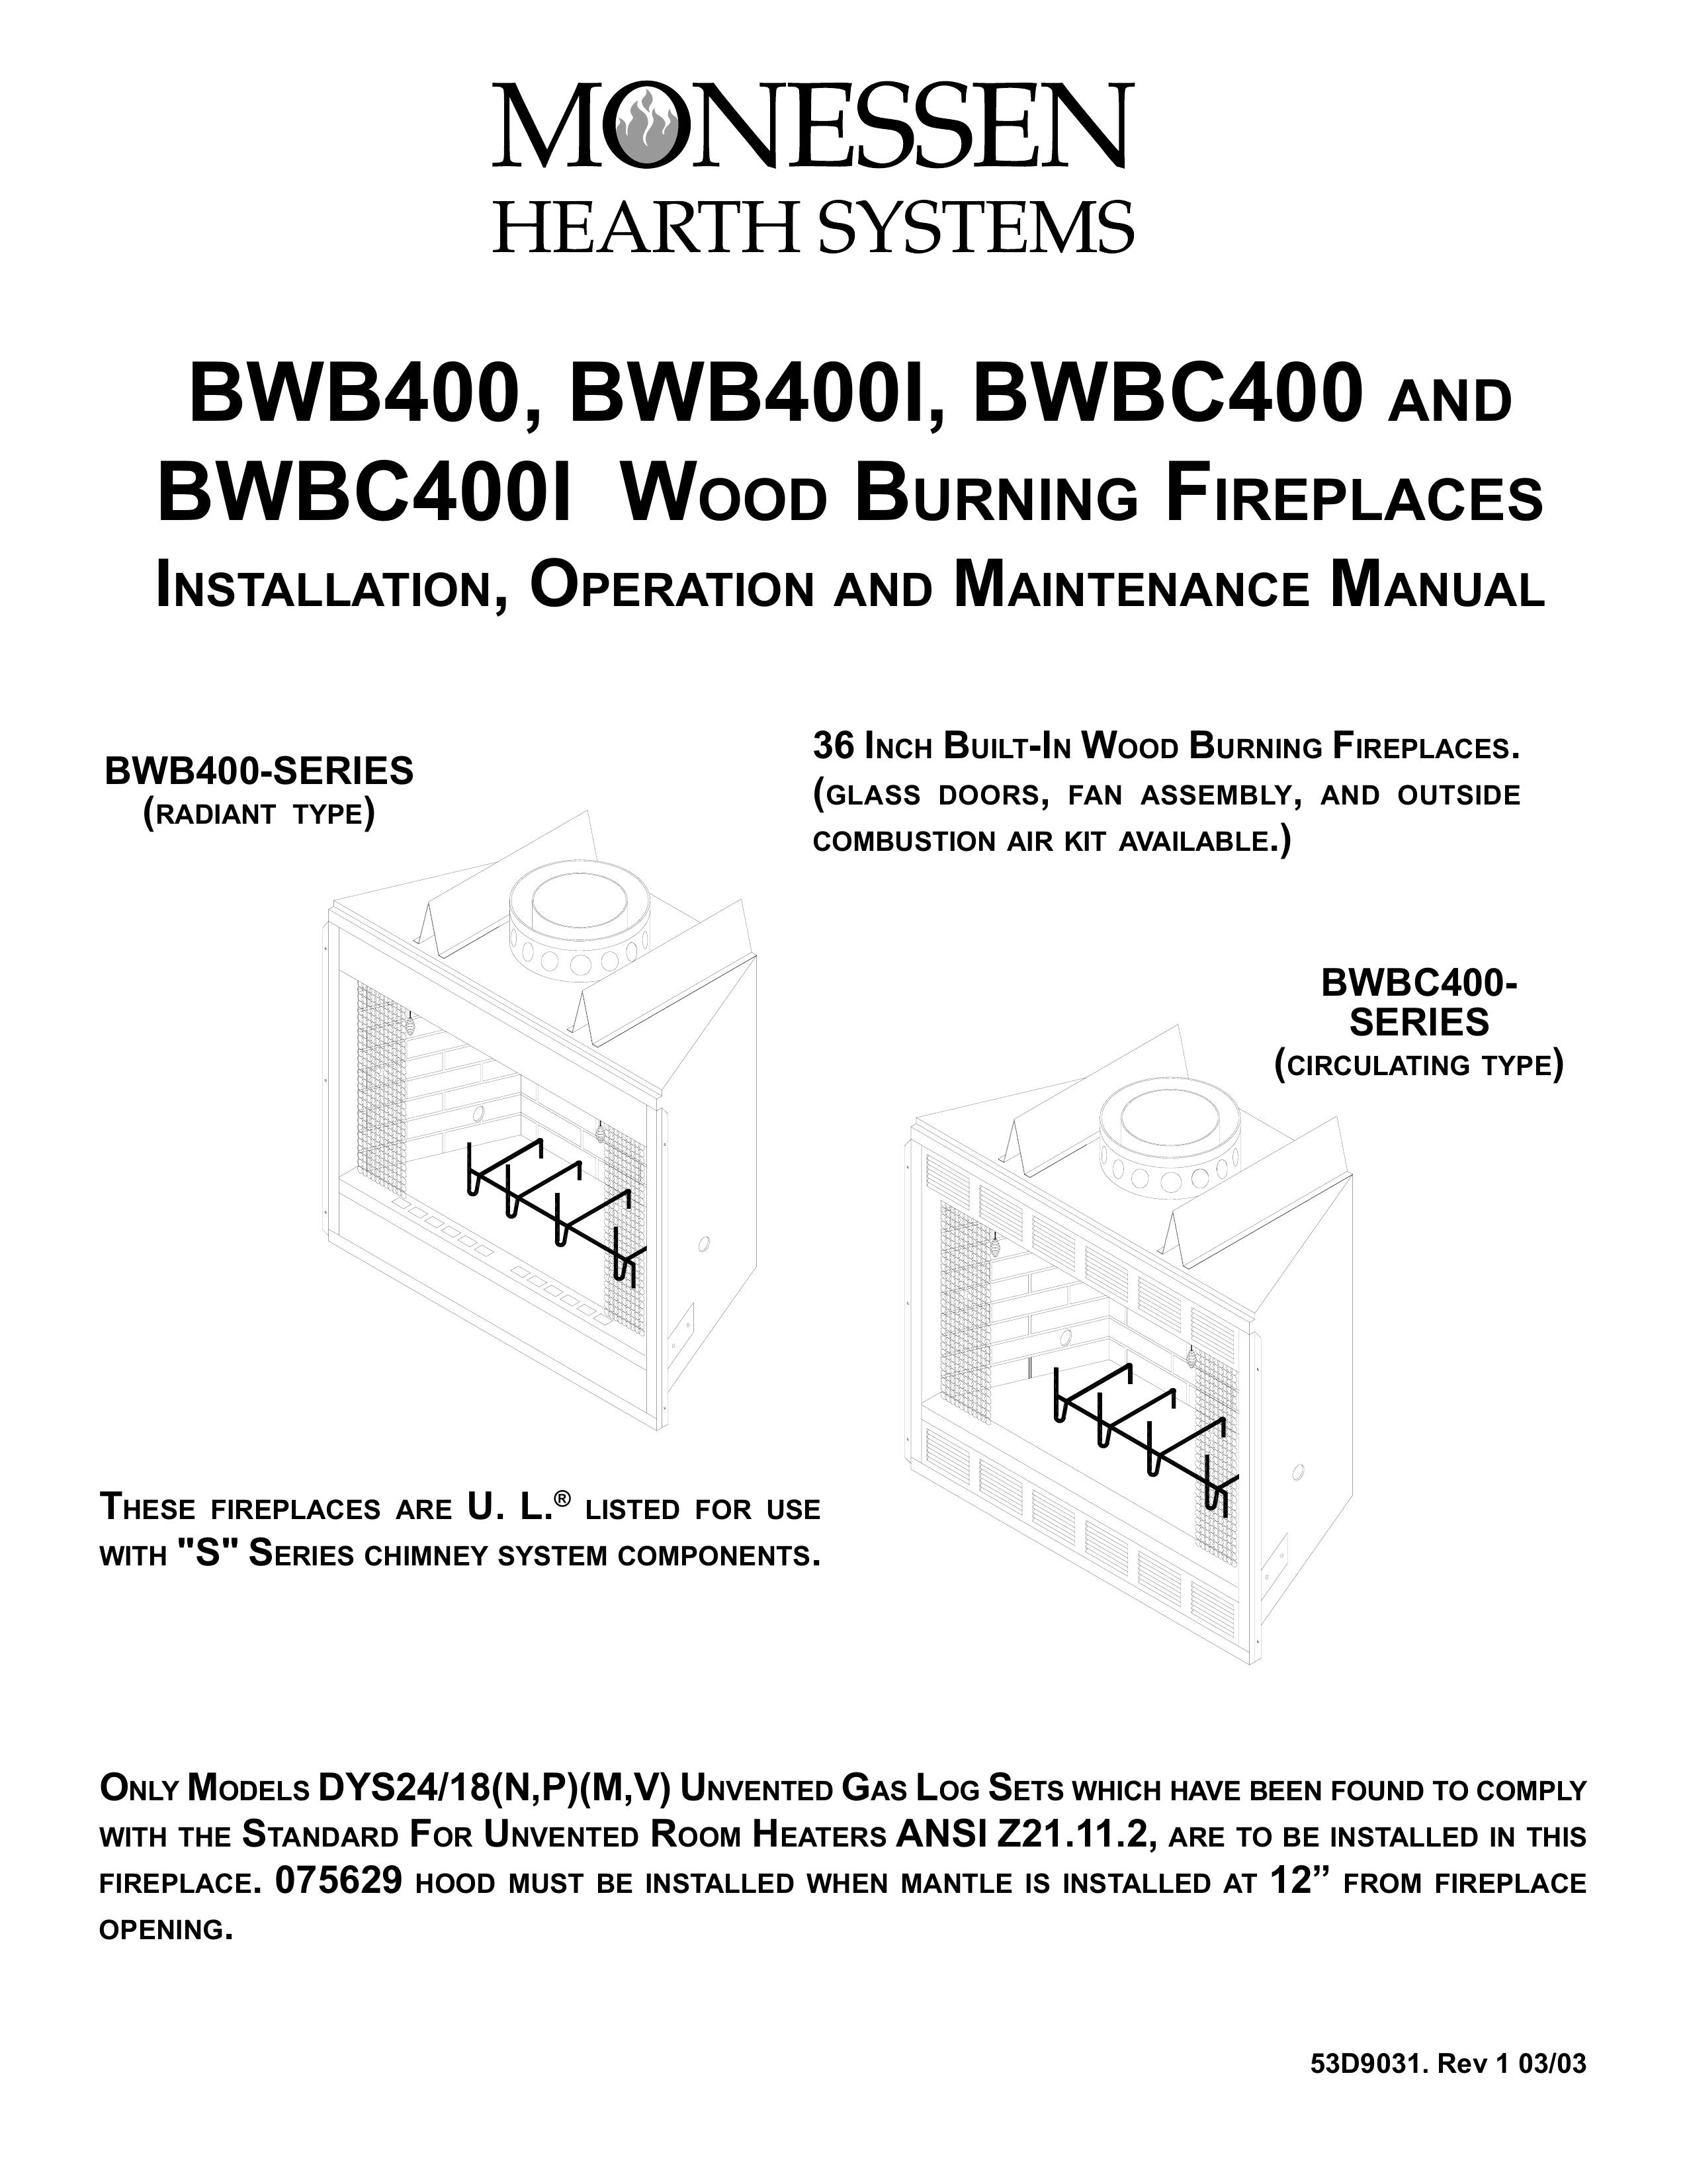 Monessen Hearth BWBC400I Fire Pit User Manual